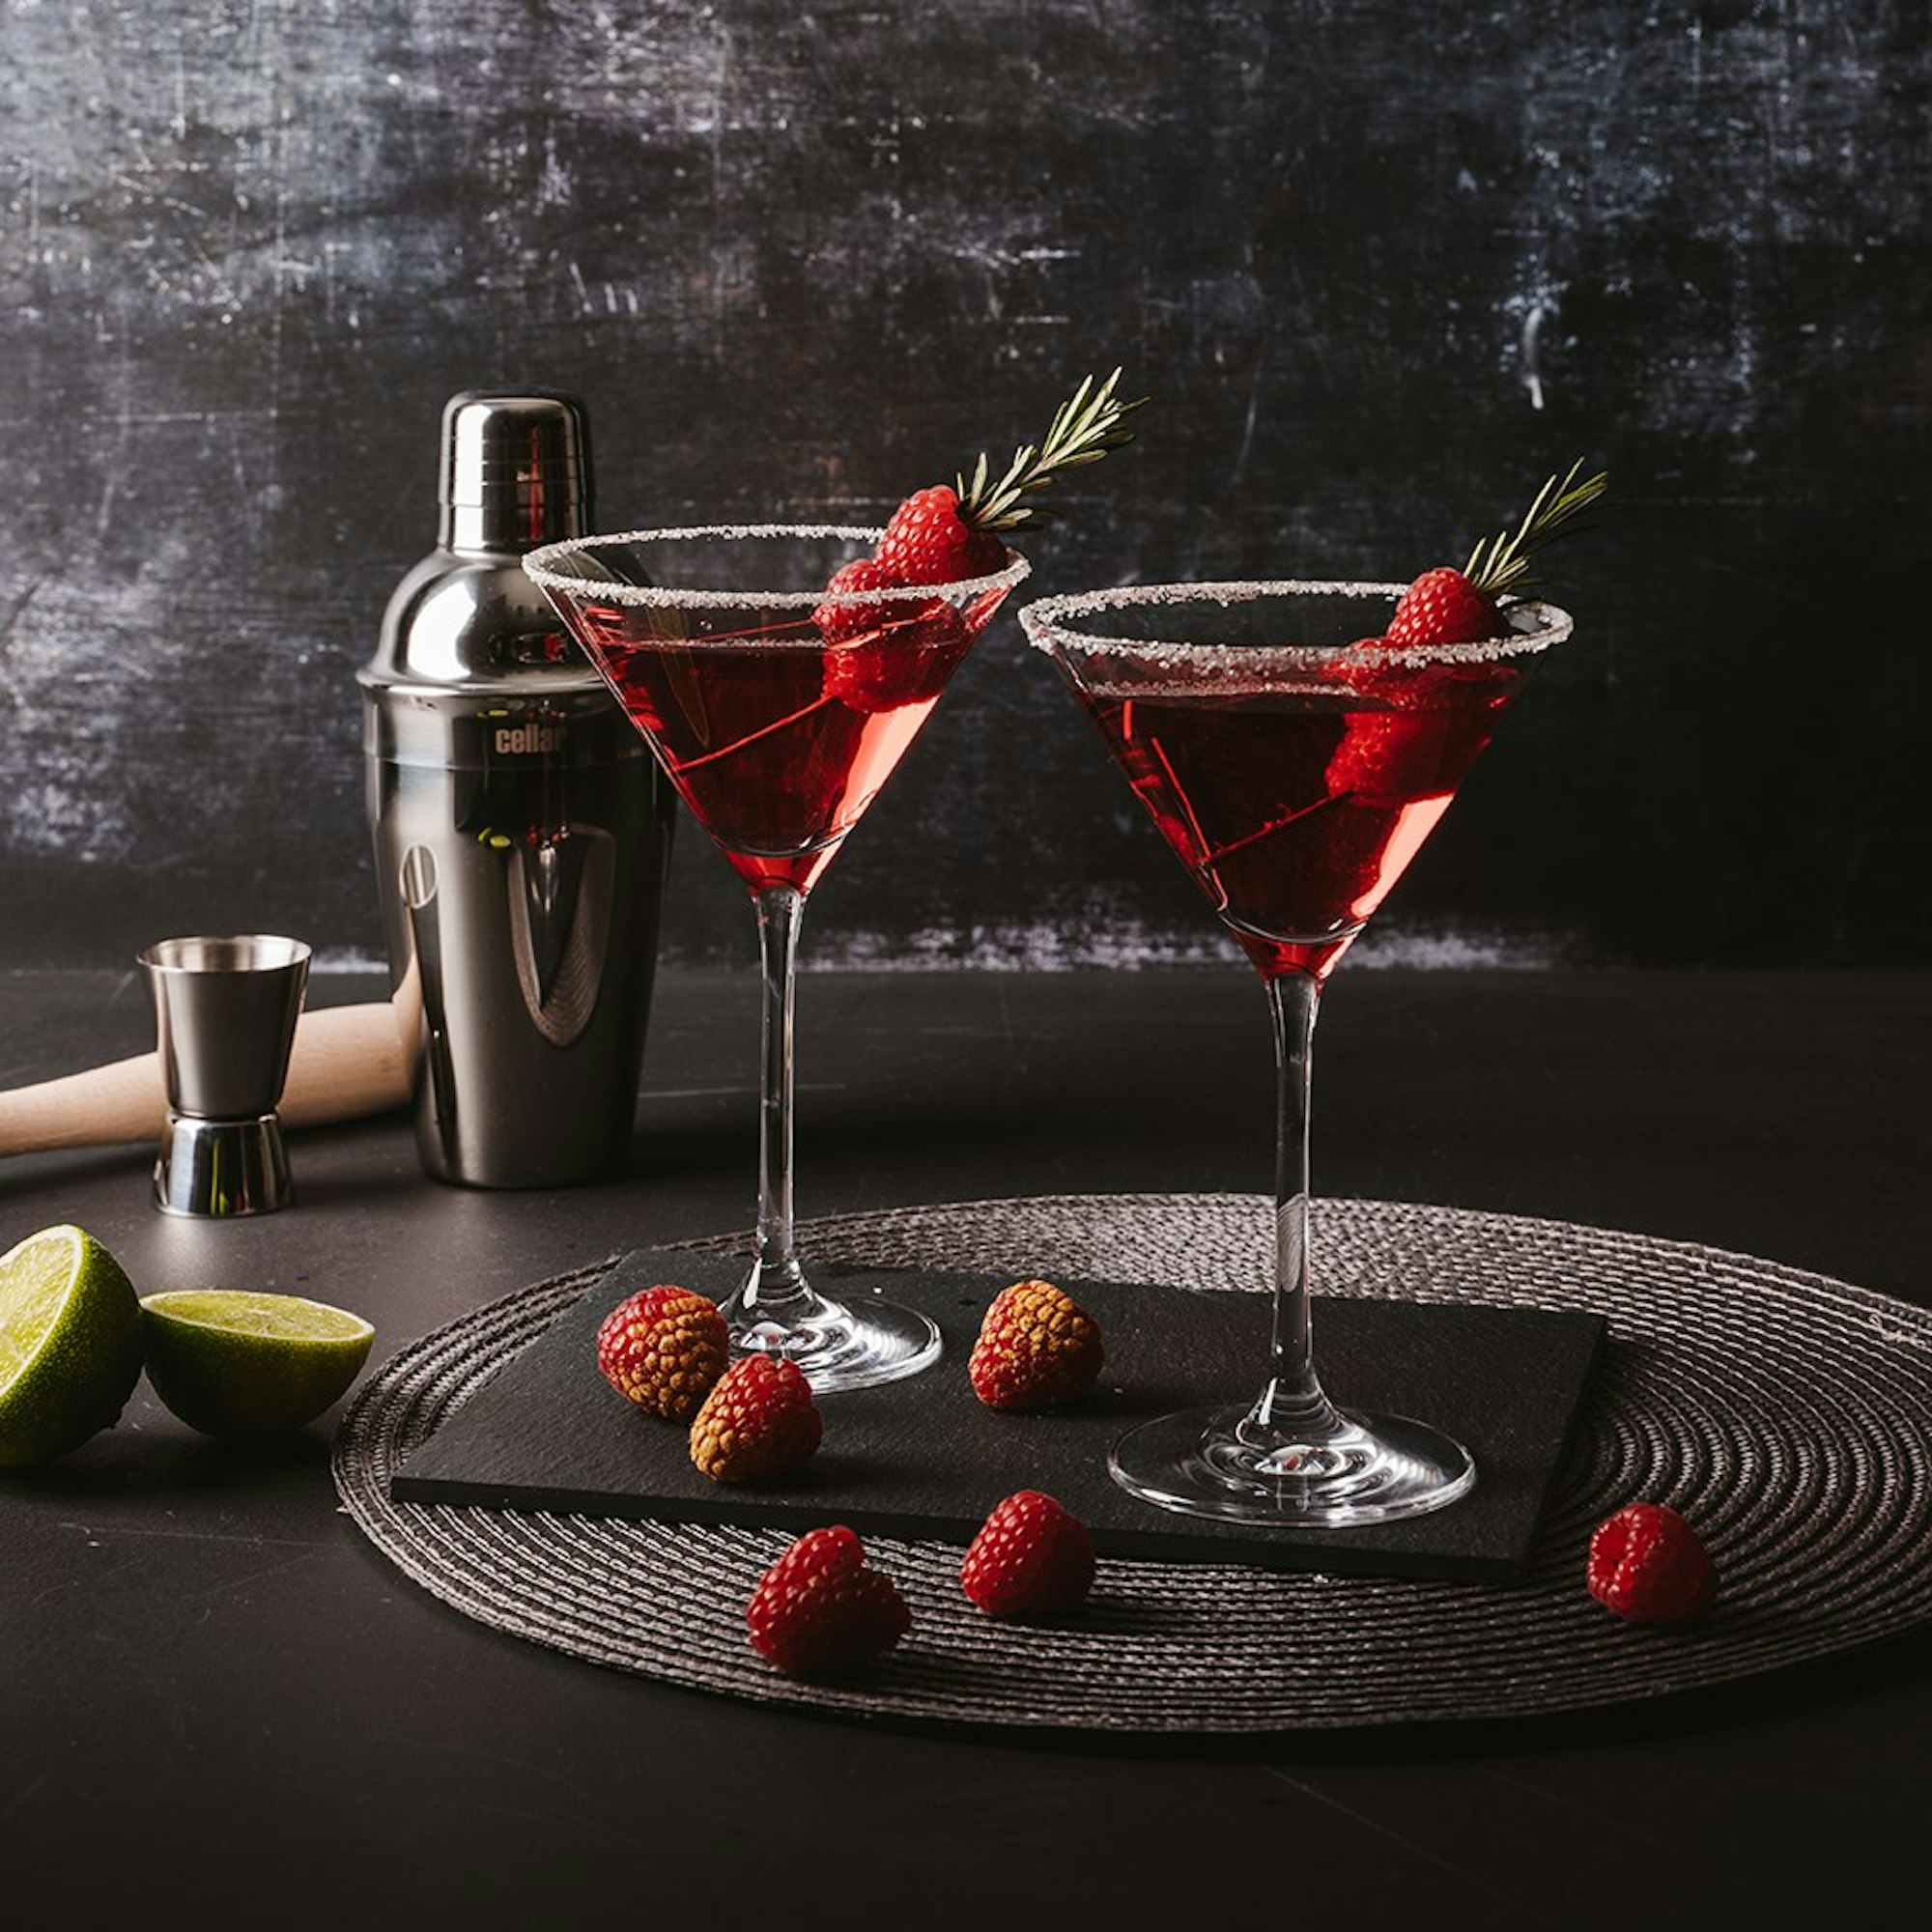 Comsopolitan cocktail with cocktal shaker